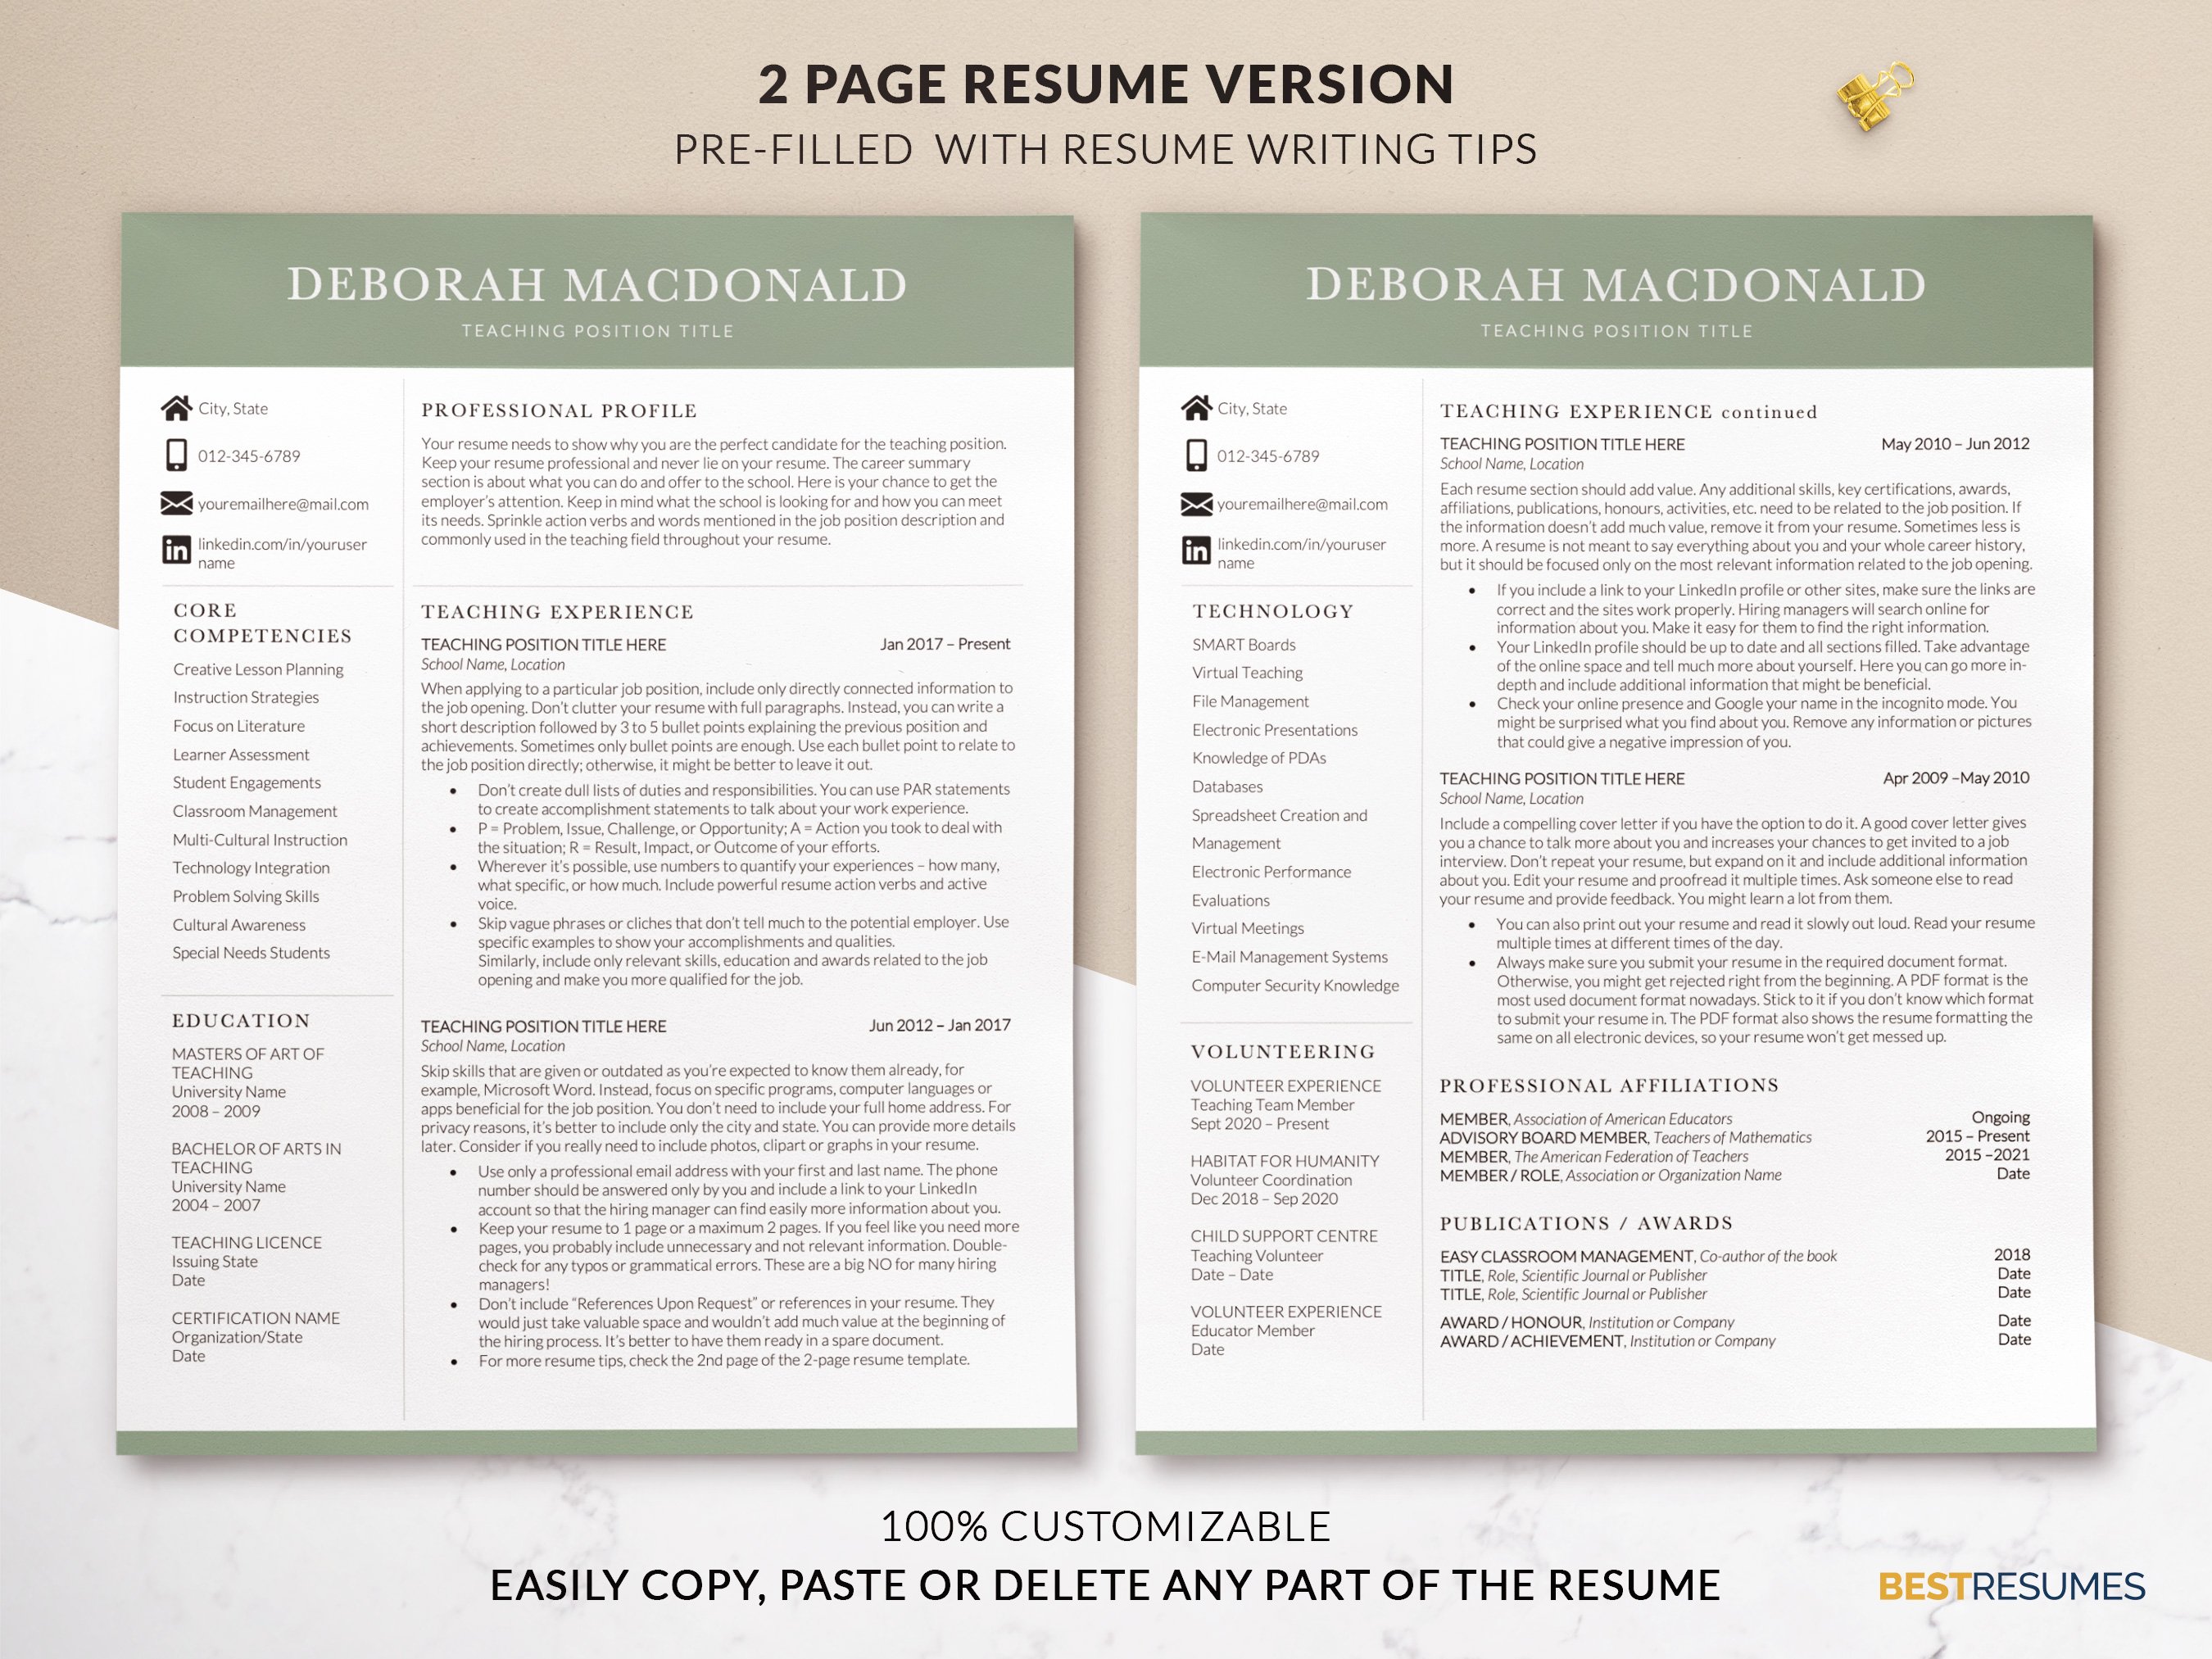 modern resume for teachers template two page resume deborah macdonald 307